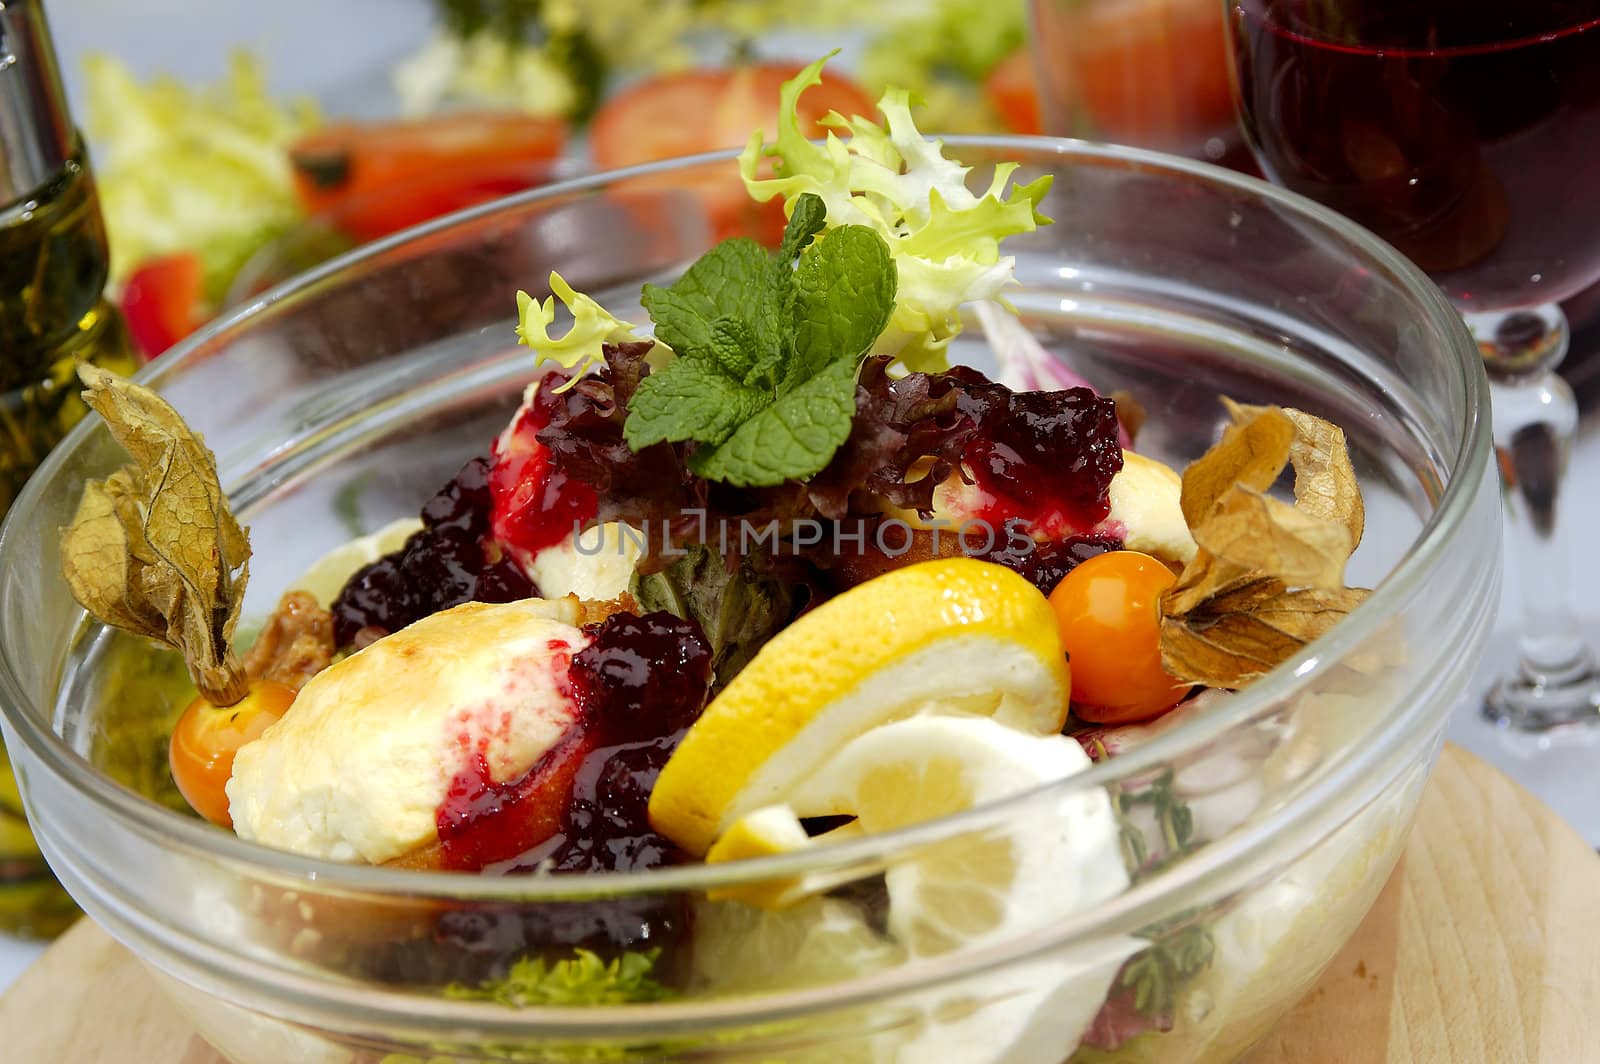 Fruit salad by hanusst